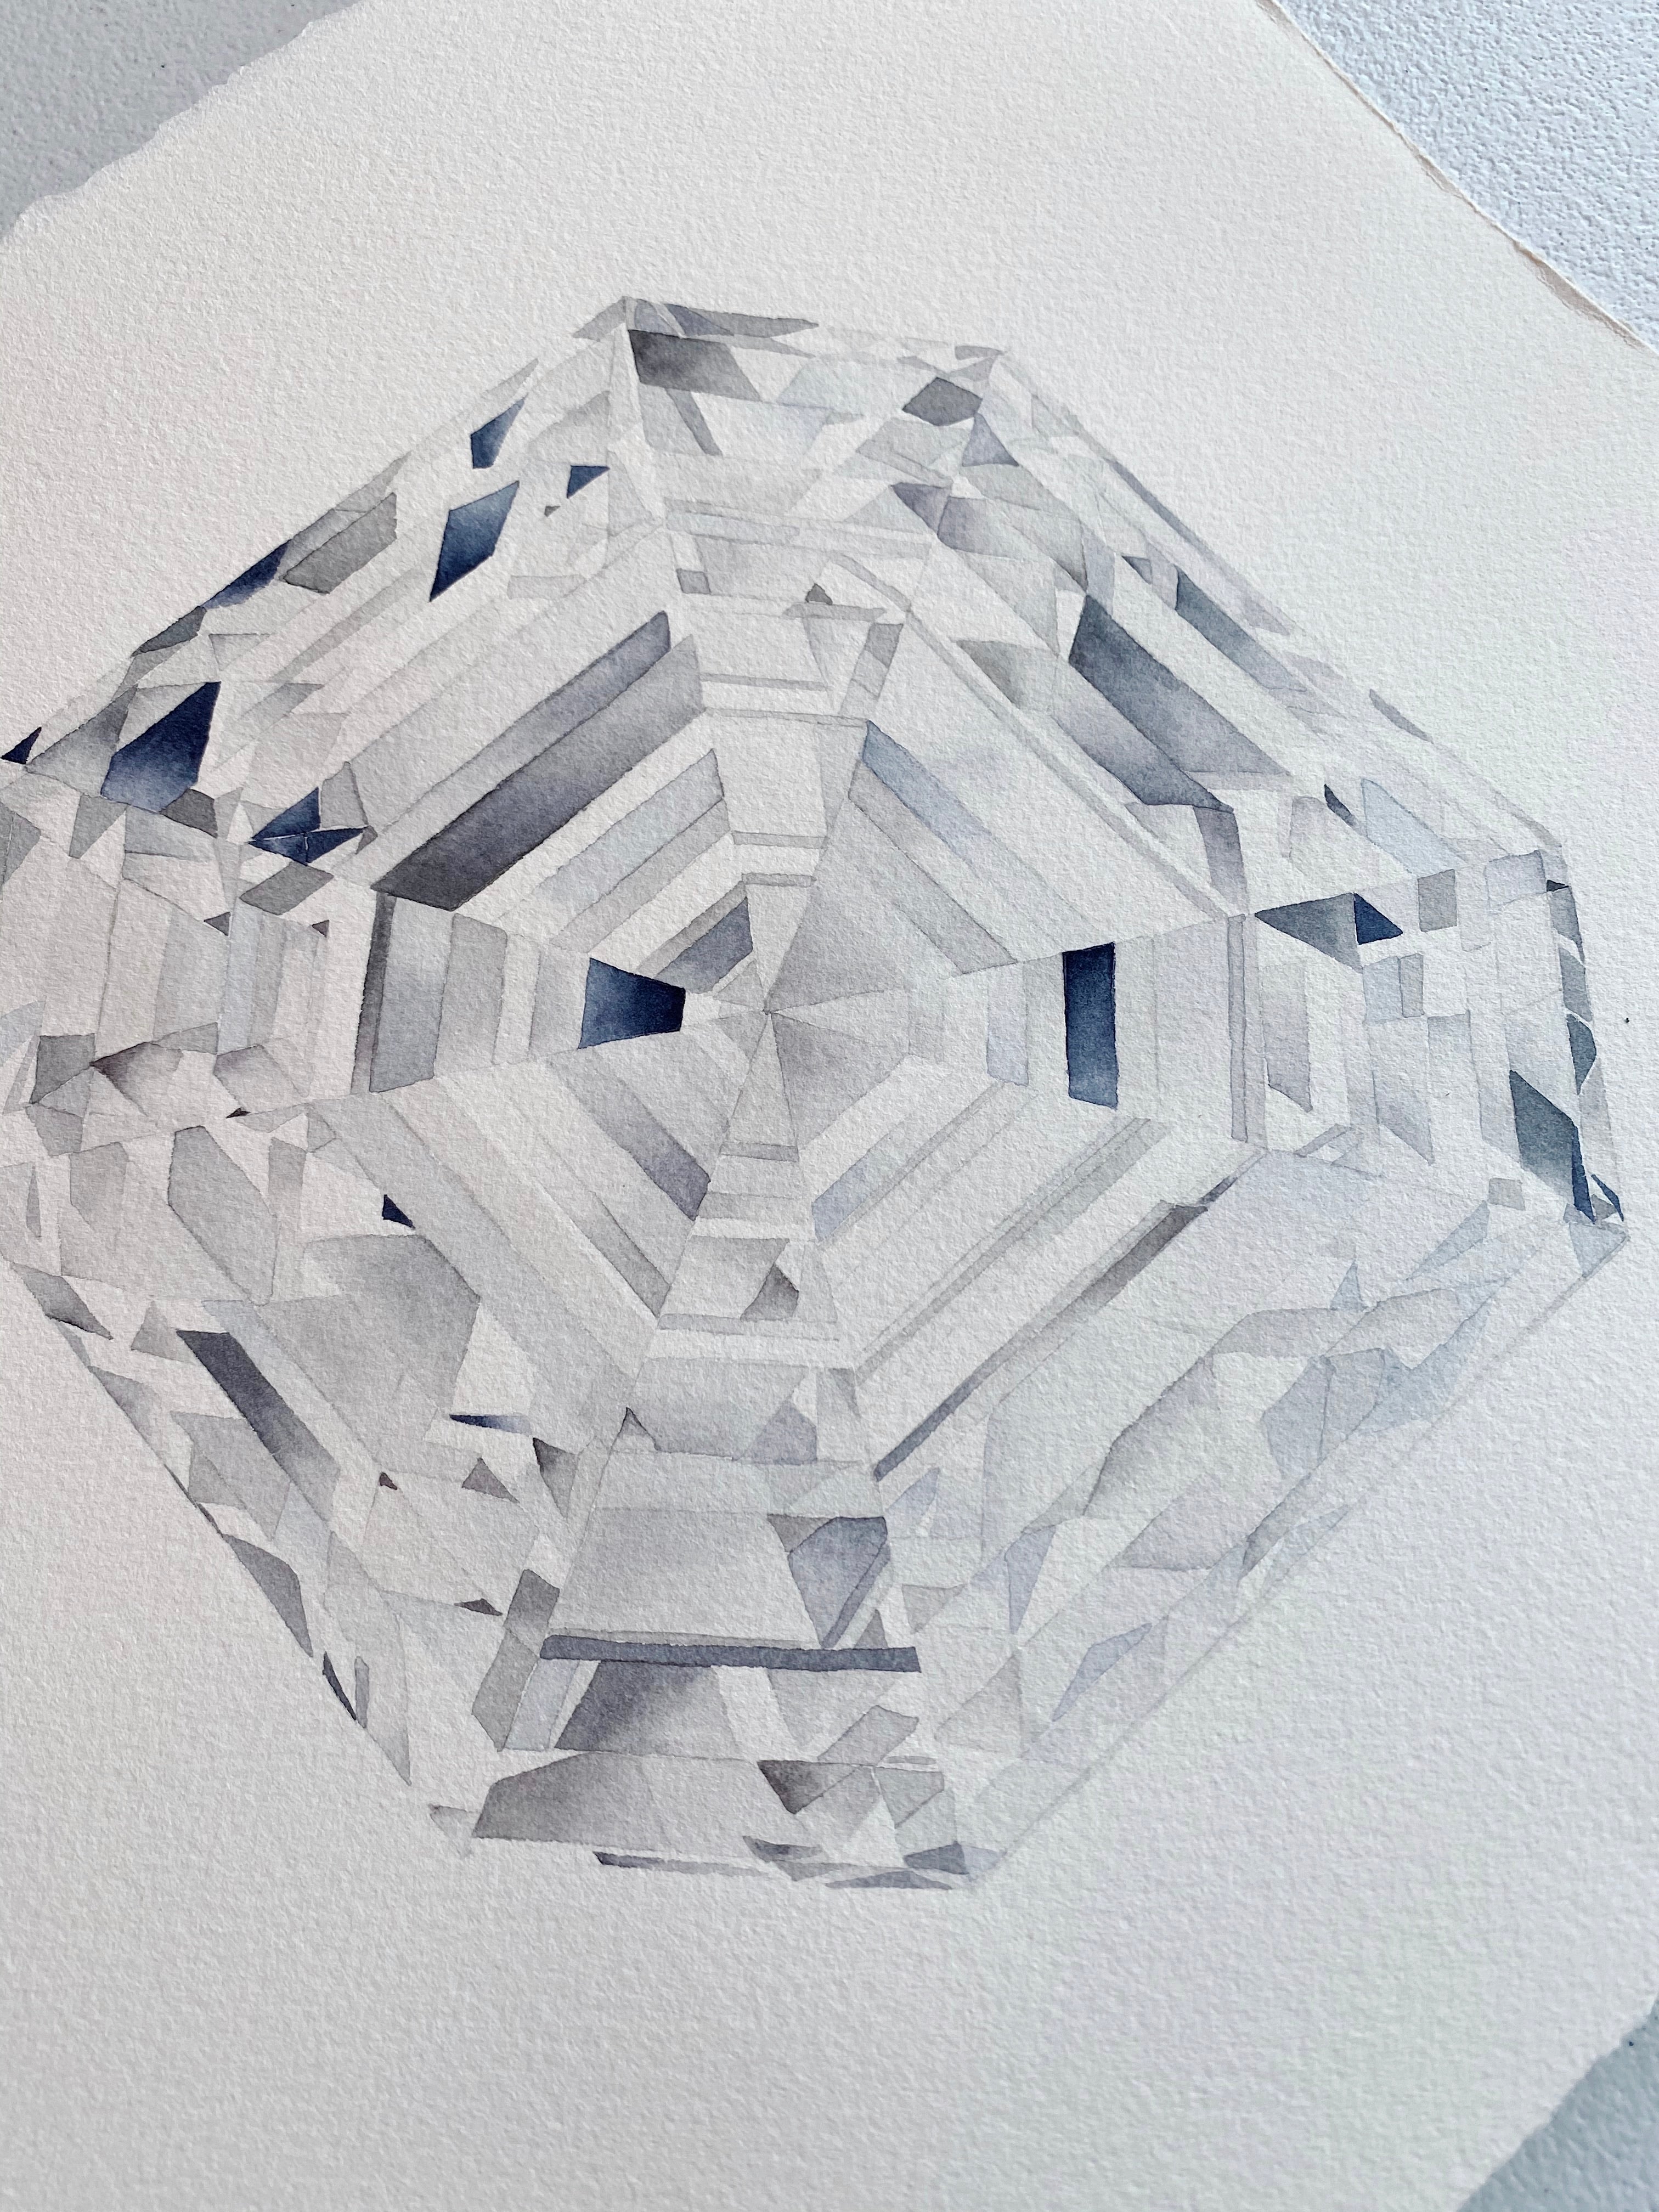 Original Painting - Watercolor Asscher Cut Diamond Painting 11x15 inches